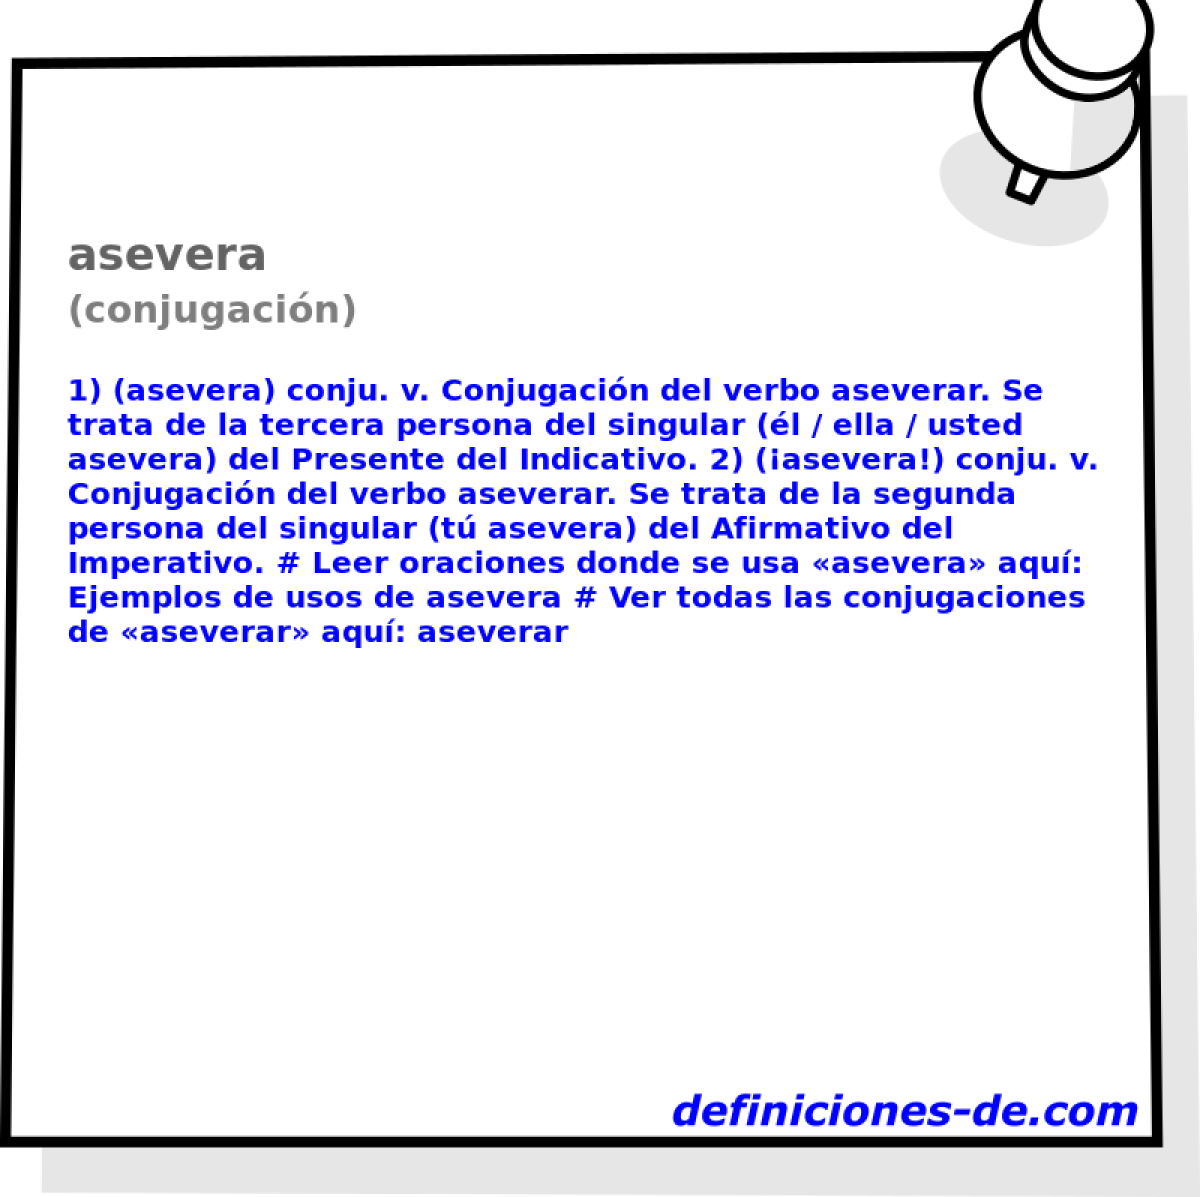 asevera (conjugacin)